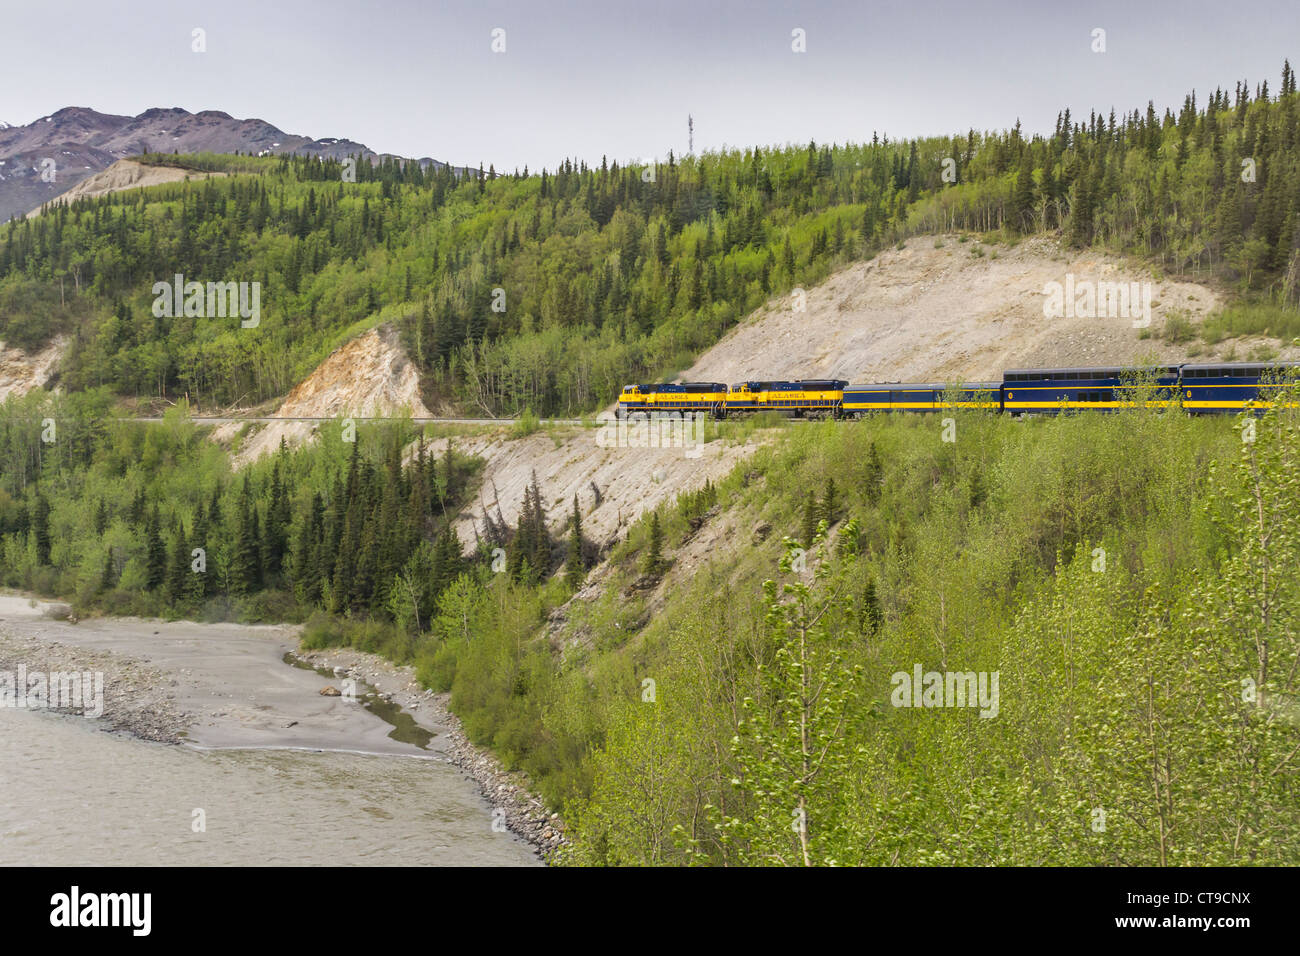 Alaska Railroad (avec Holland America wagons) escalade vers le parc national Denali, suivant la rivière Nenana lit. Banque D'Images